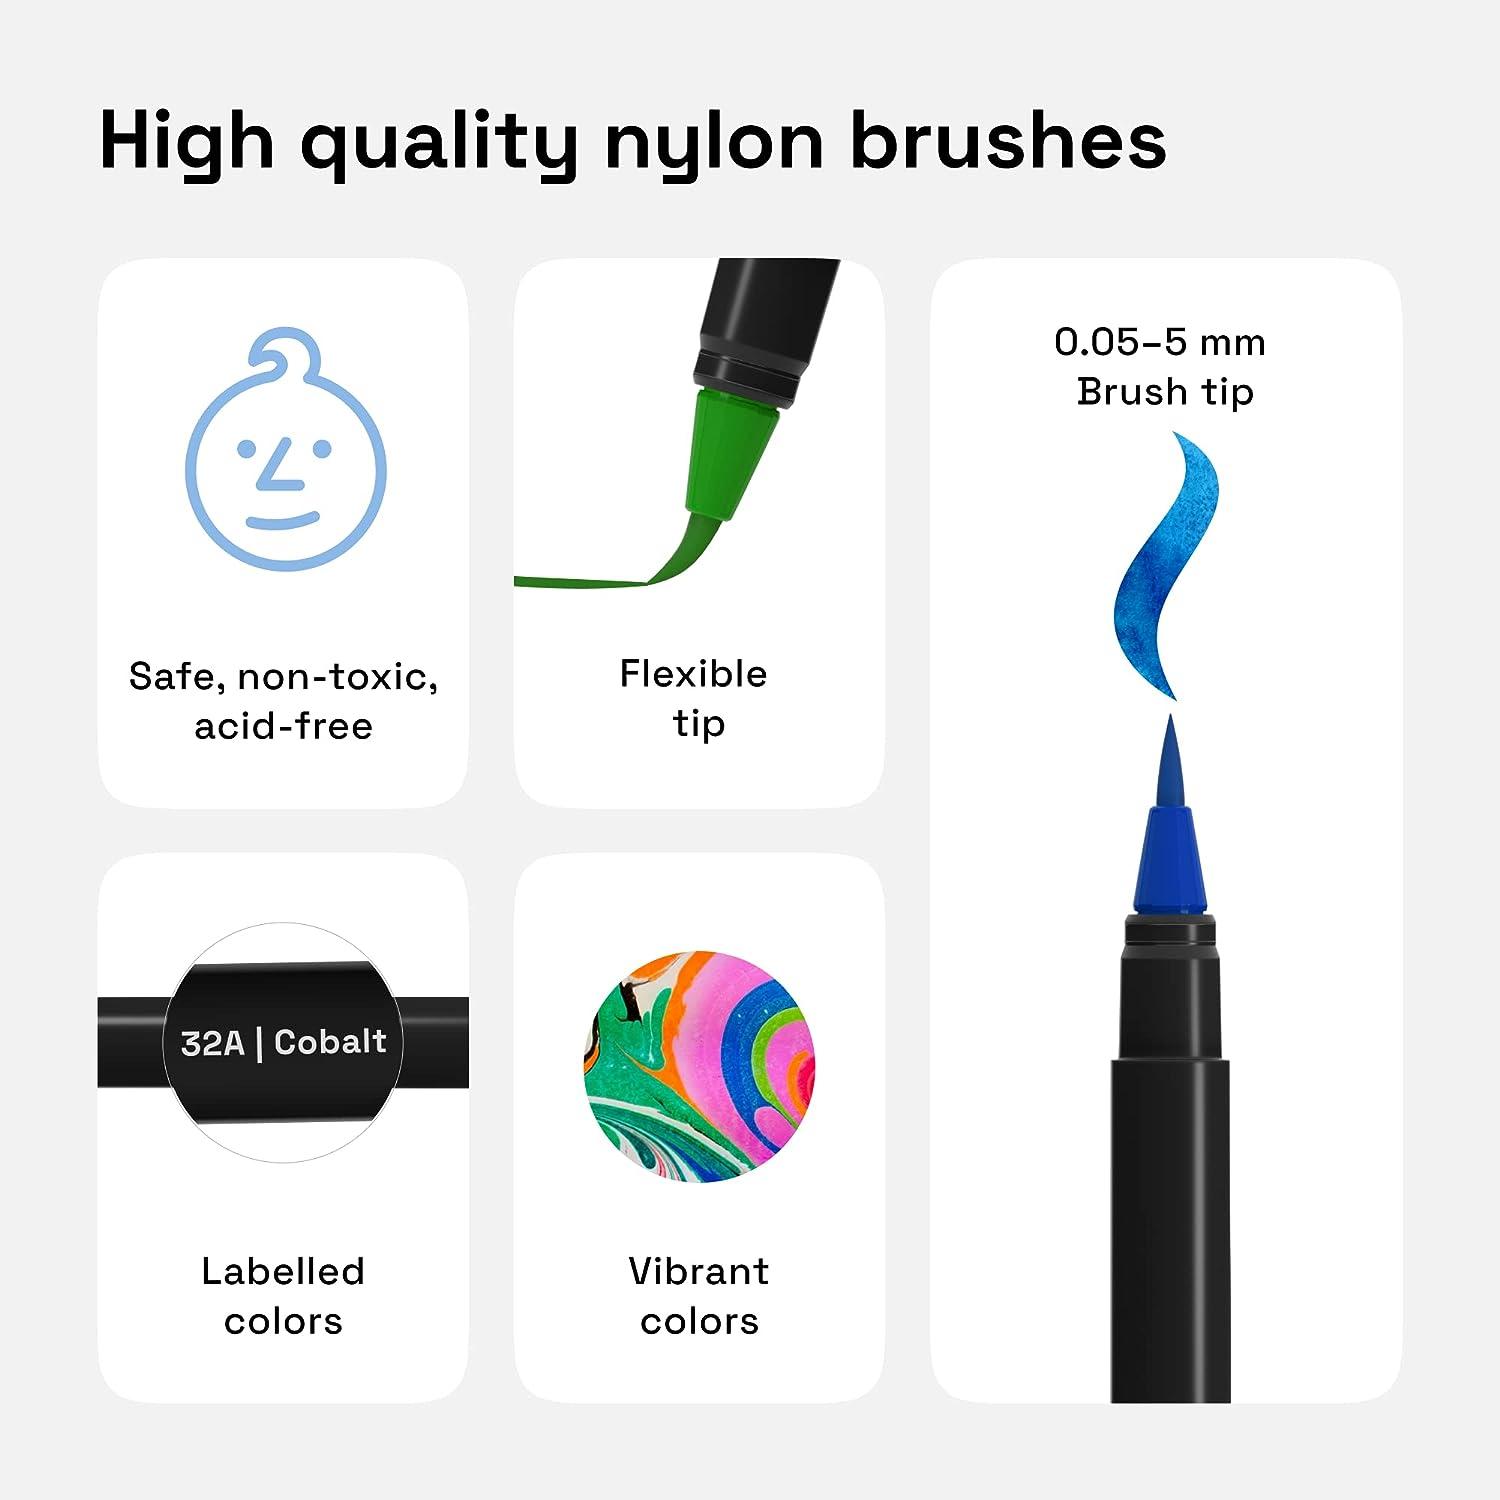 Artistro Watercolor Brush Tip Paint Marker Pens - Set of 8 Basic & 8 Metallic Colors